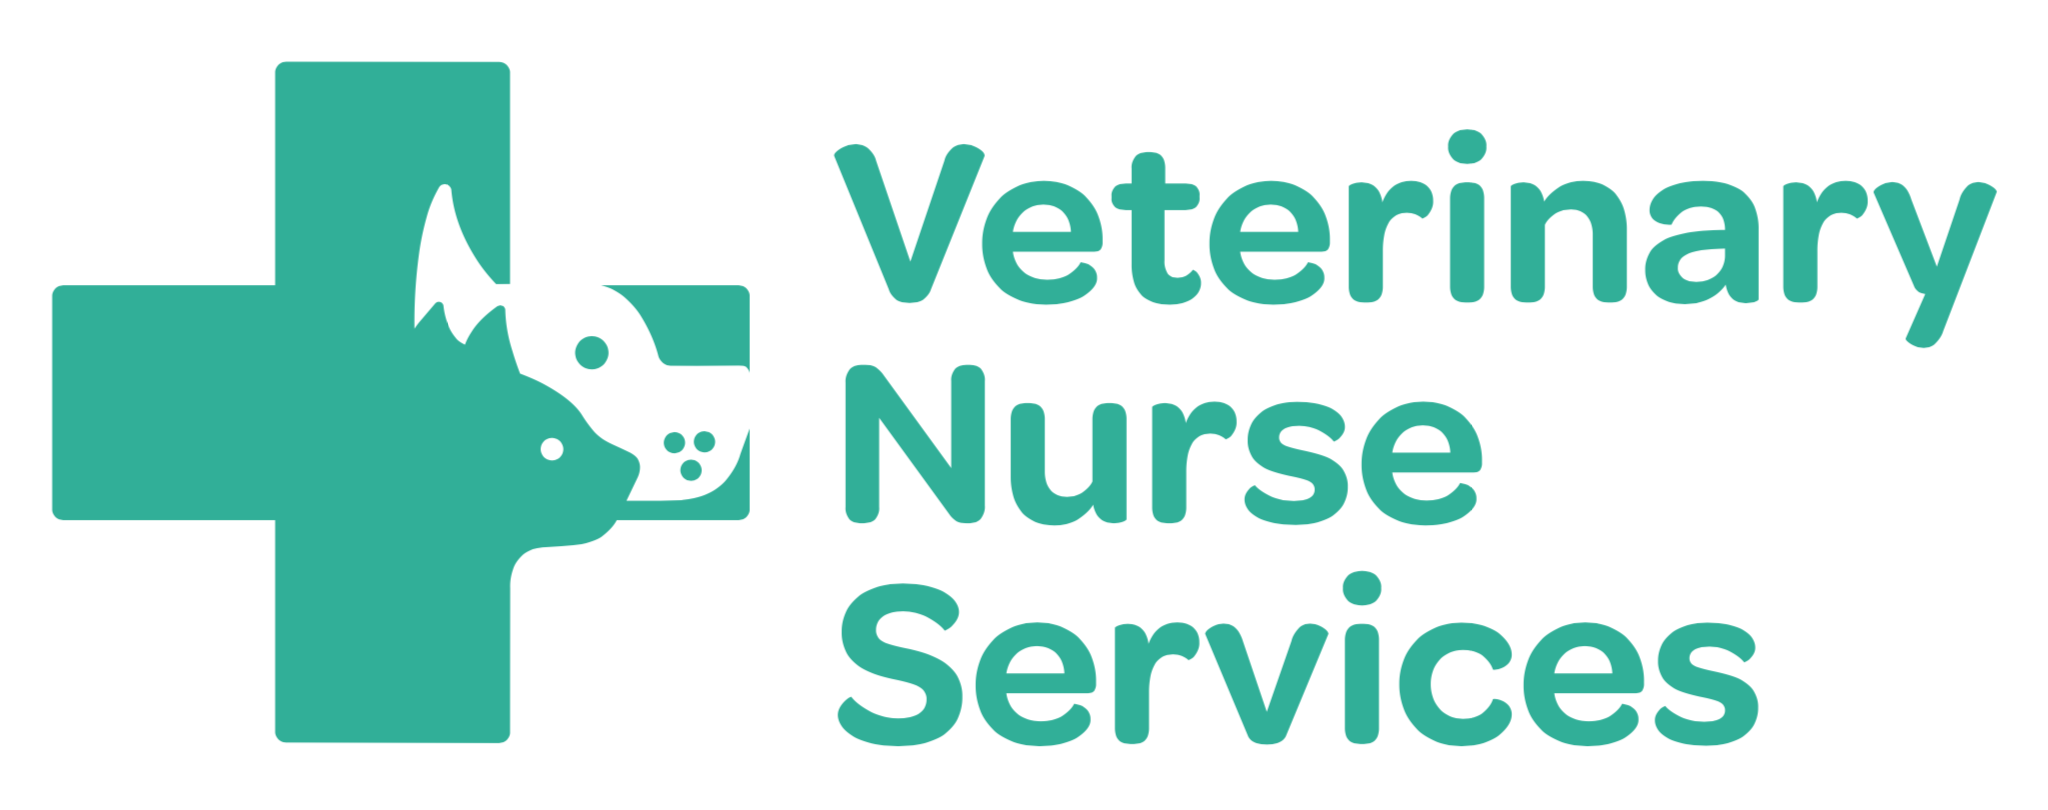 Veterinary Nurse Services